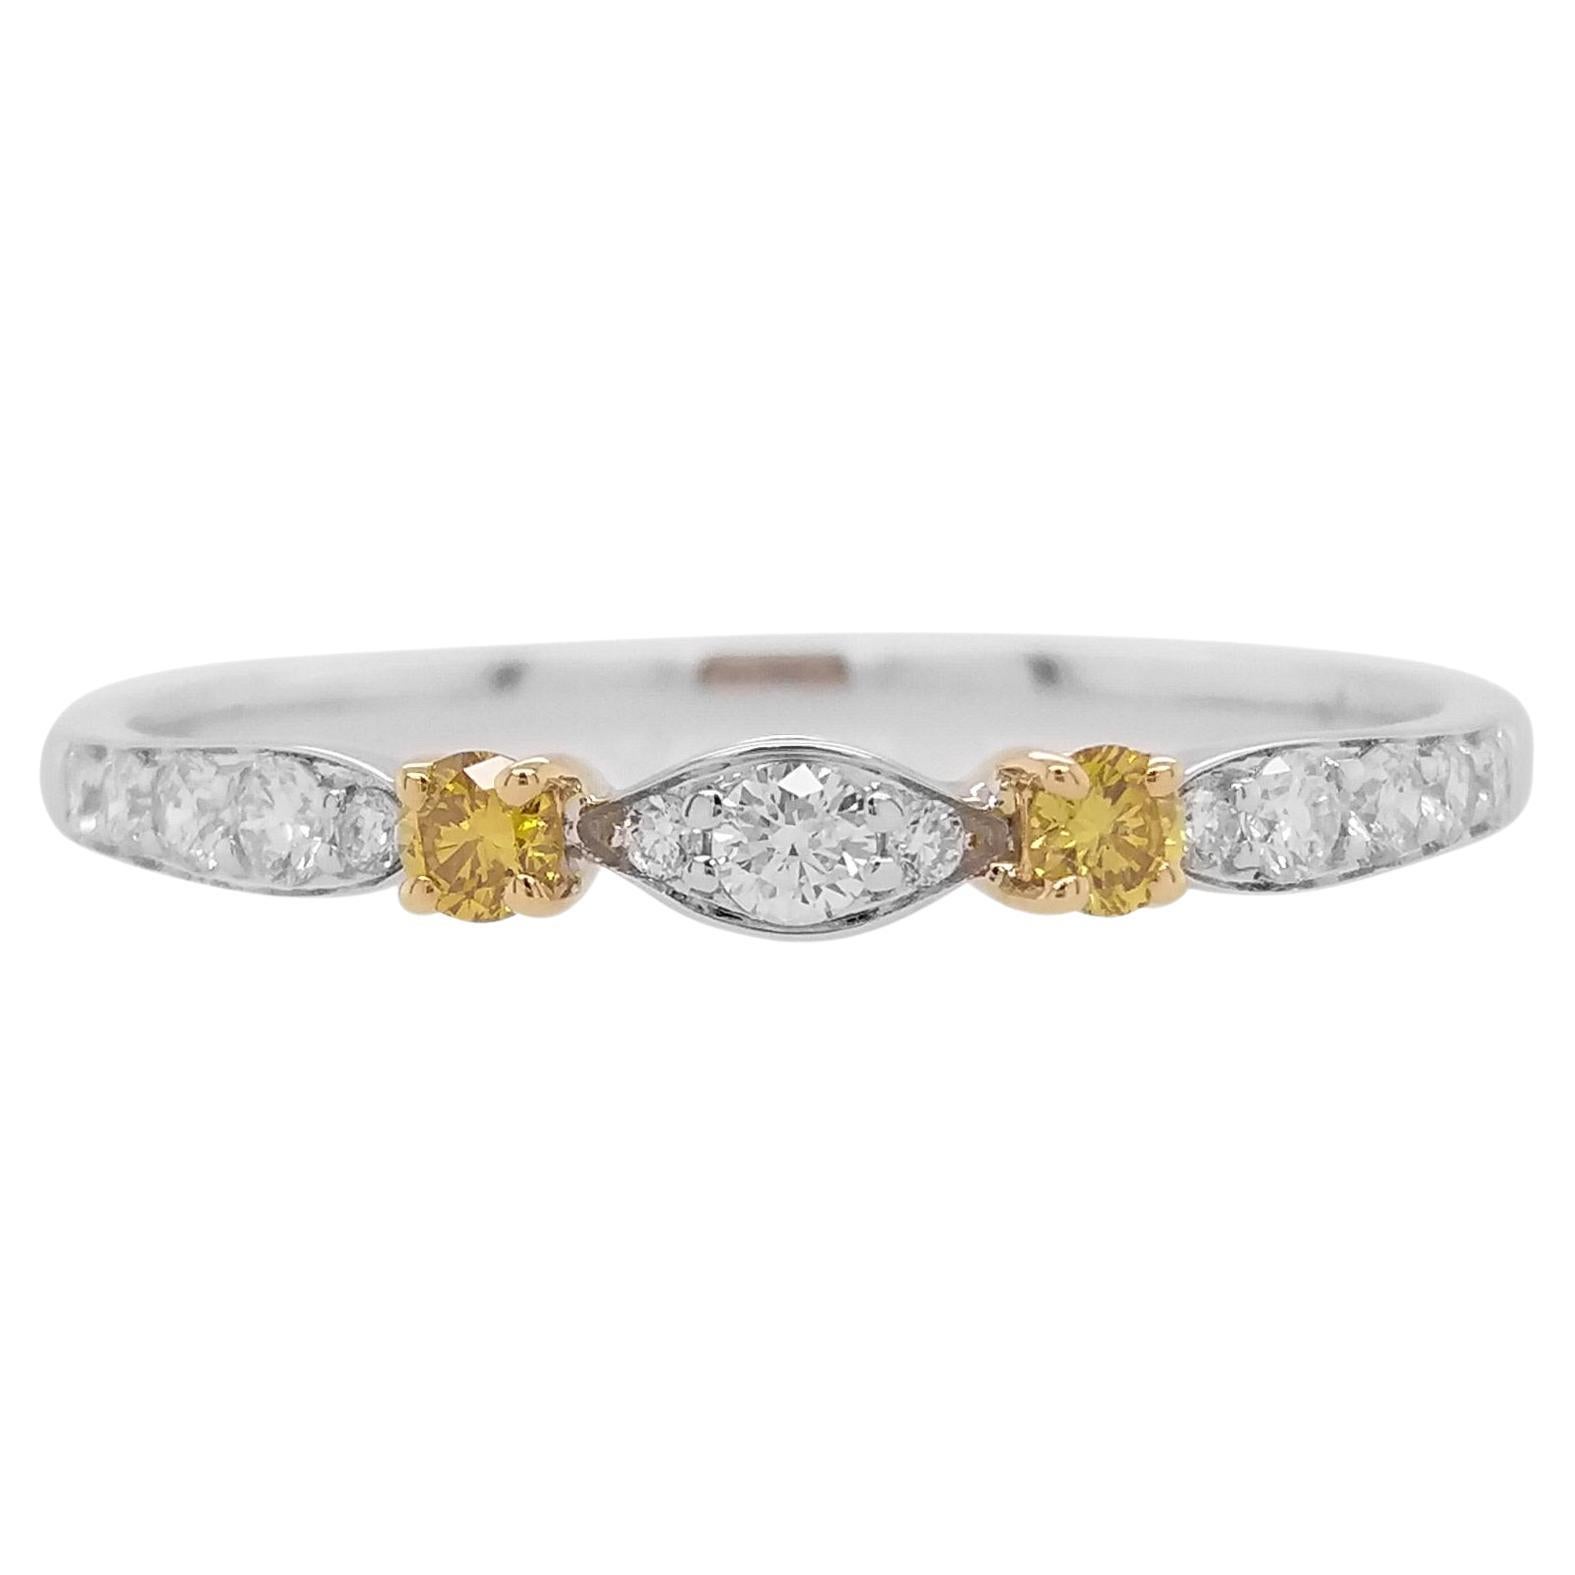 Round Yellow Diamond and White Diamond Band Ring made in 18K Gold